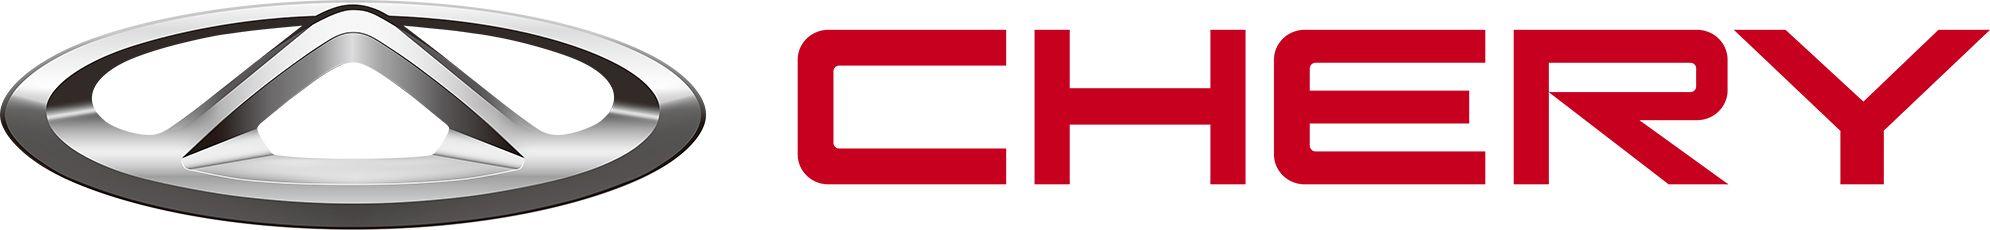 Chery Logo - Chery Car Logo